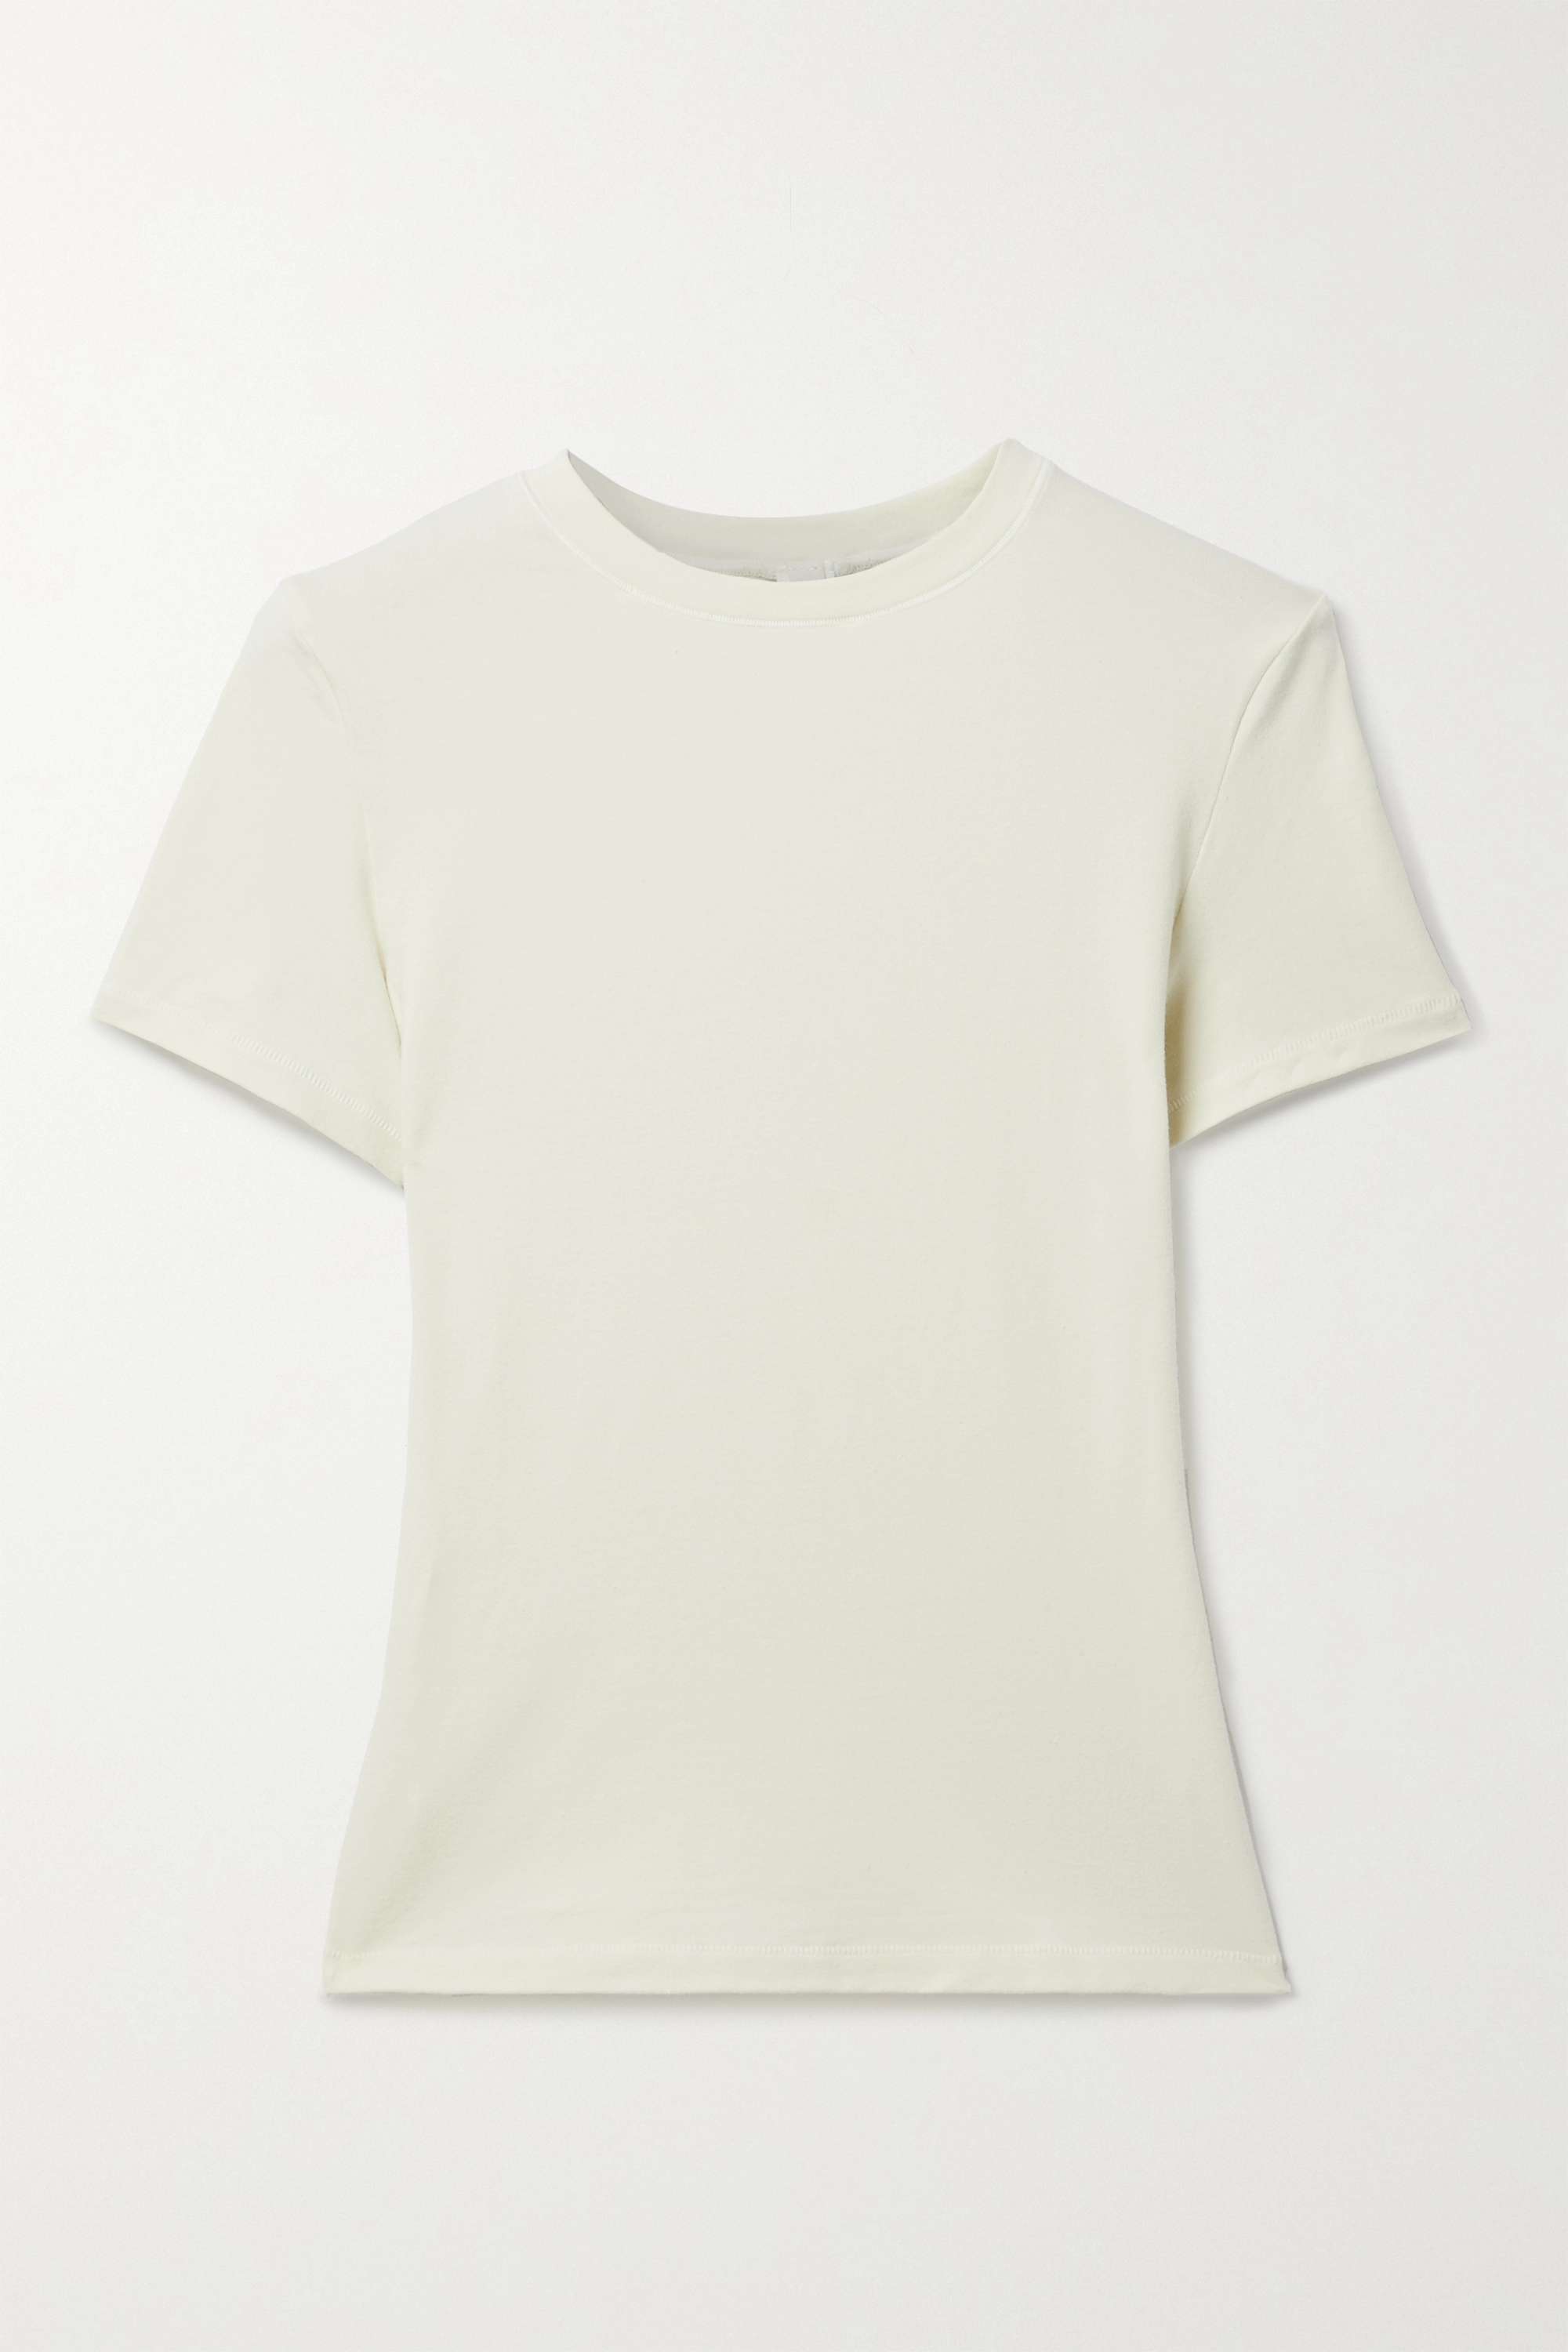 SKIMS + Stretch-Cotton Jersey T-Shirt in Bone